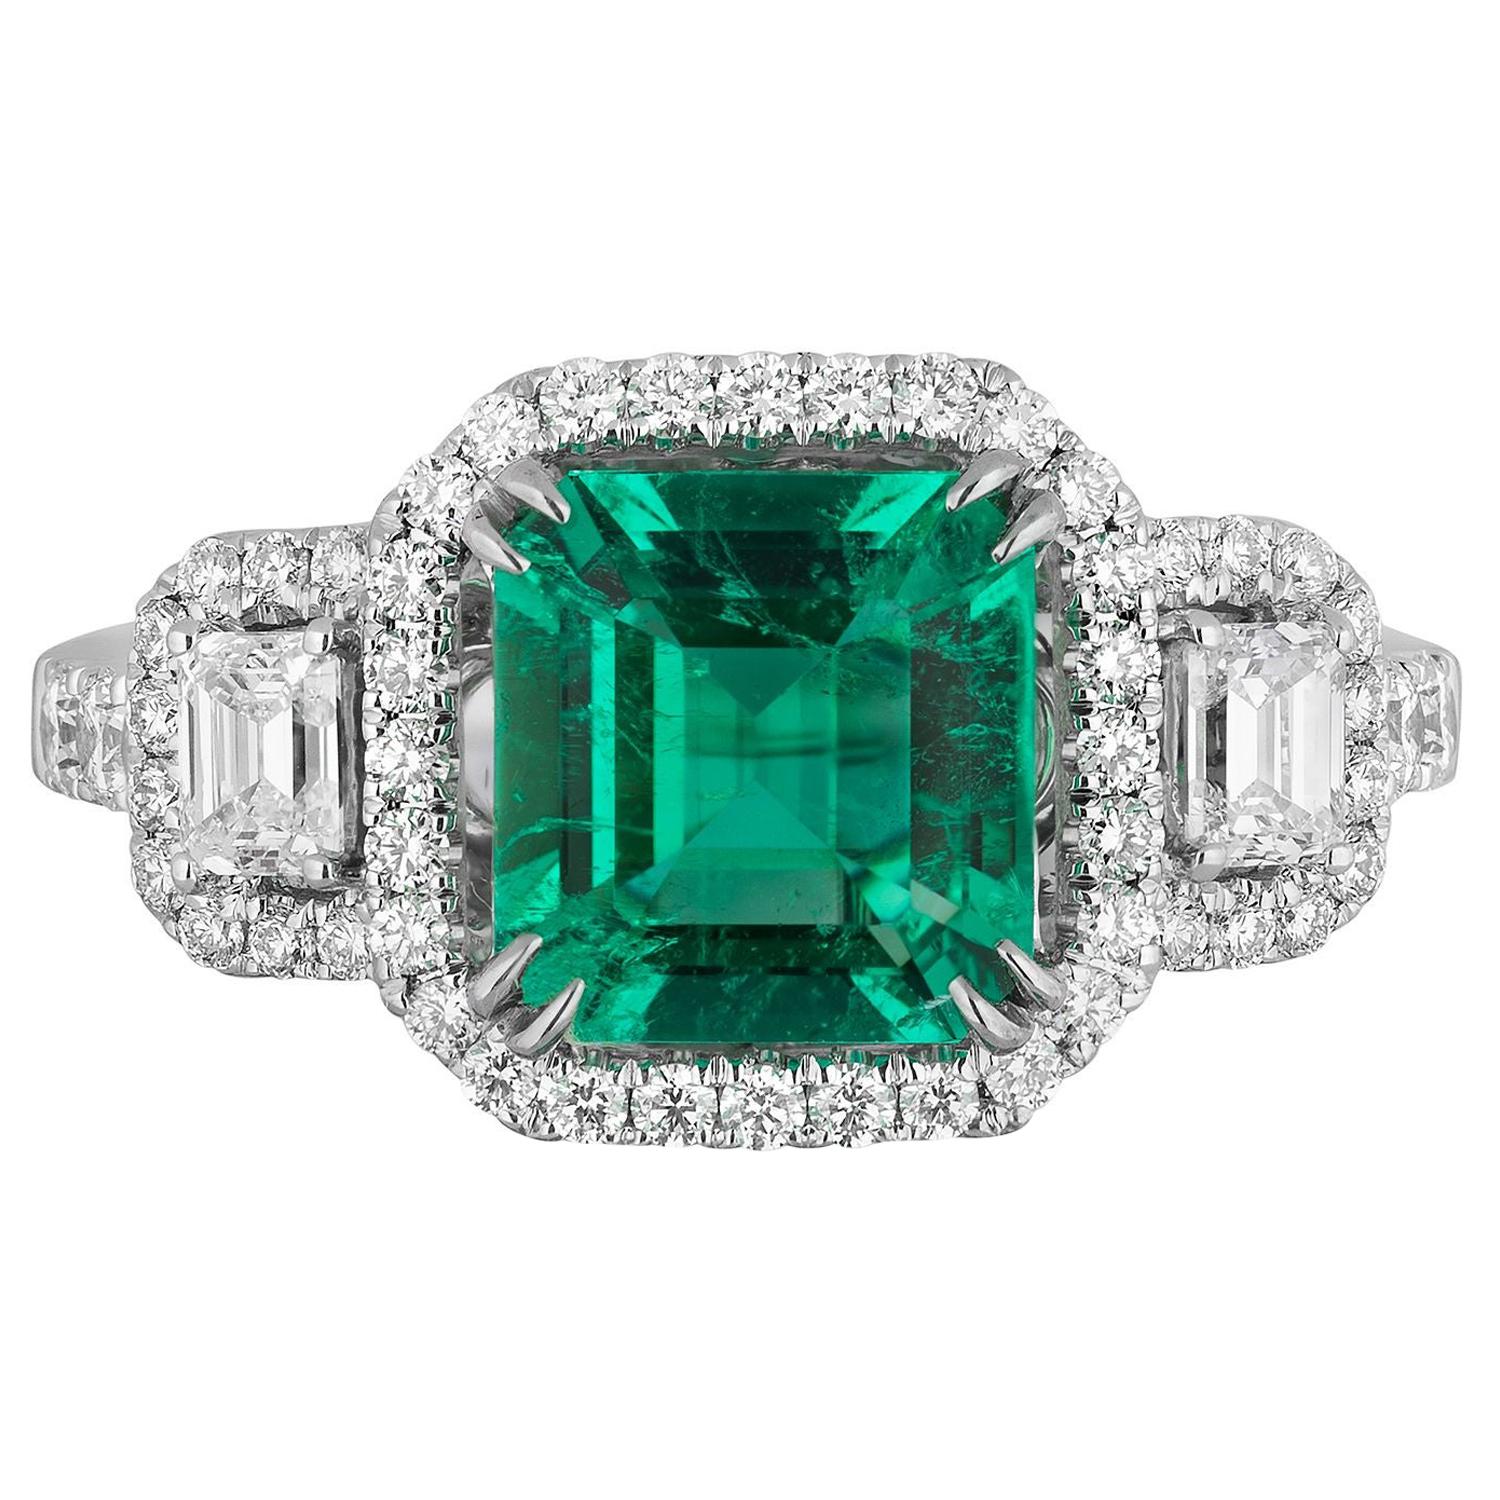 1.75 Carat Colombian Emerald Diamond Cocktail Ring